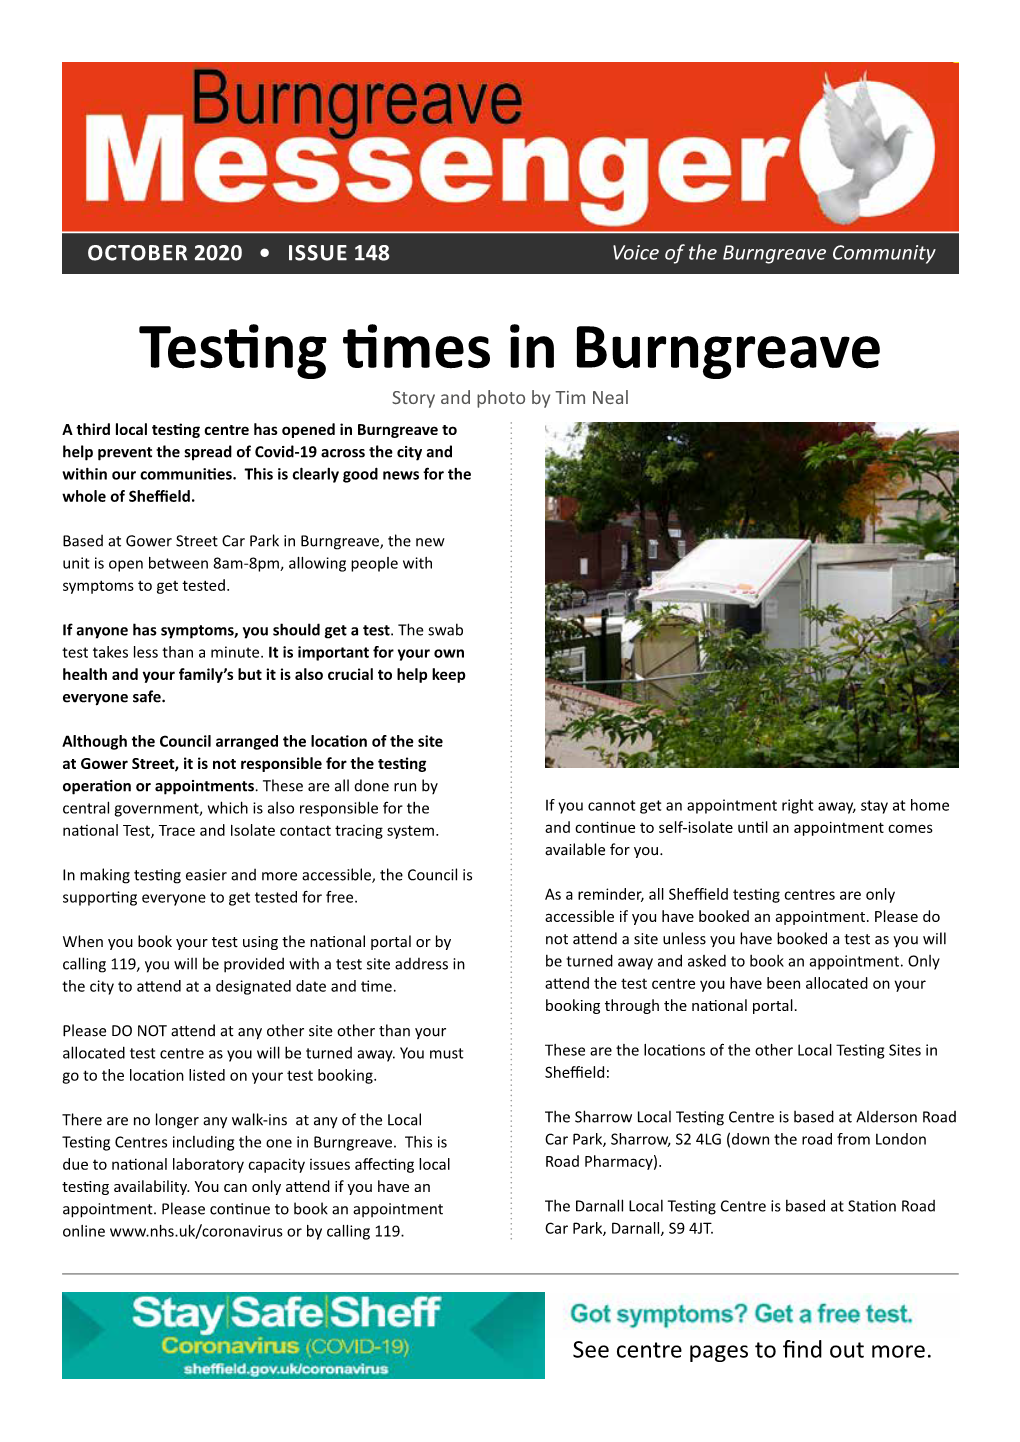 Burngreave Messenger October 2020 Issue